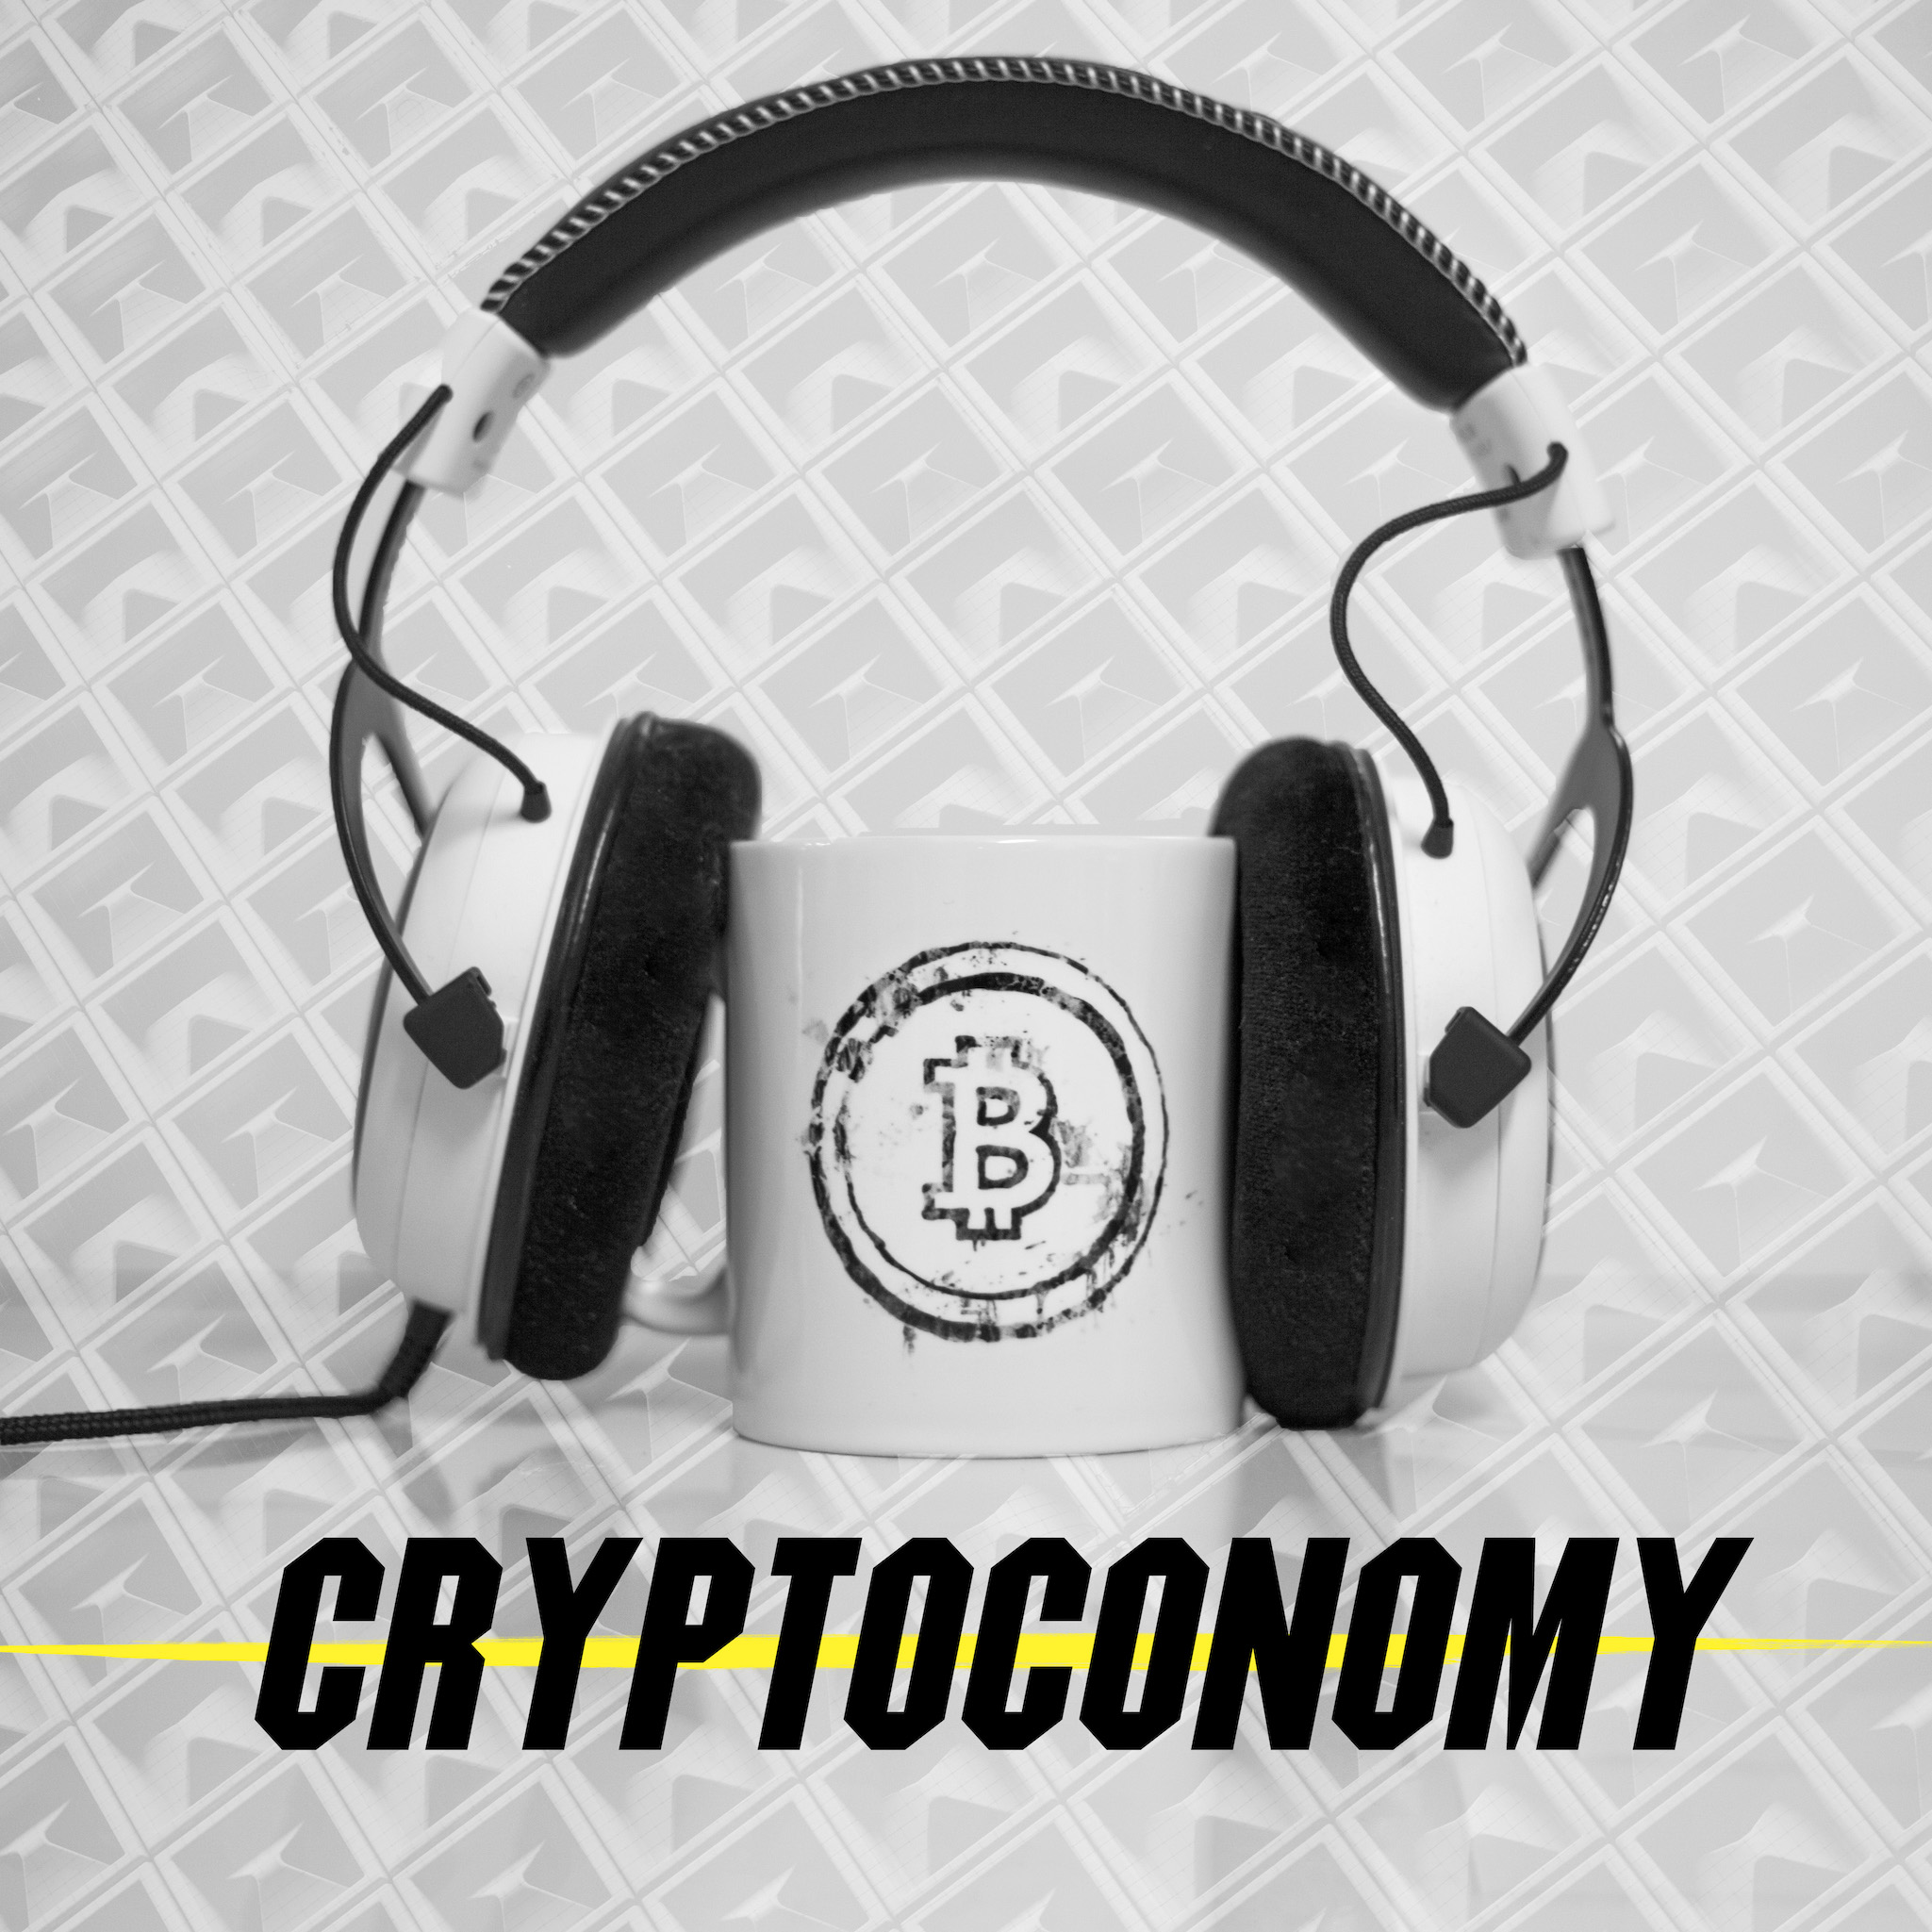 CryptoQuikRead_191 - The Cryptocurrency Phenomenon [Part 6]